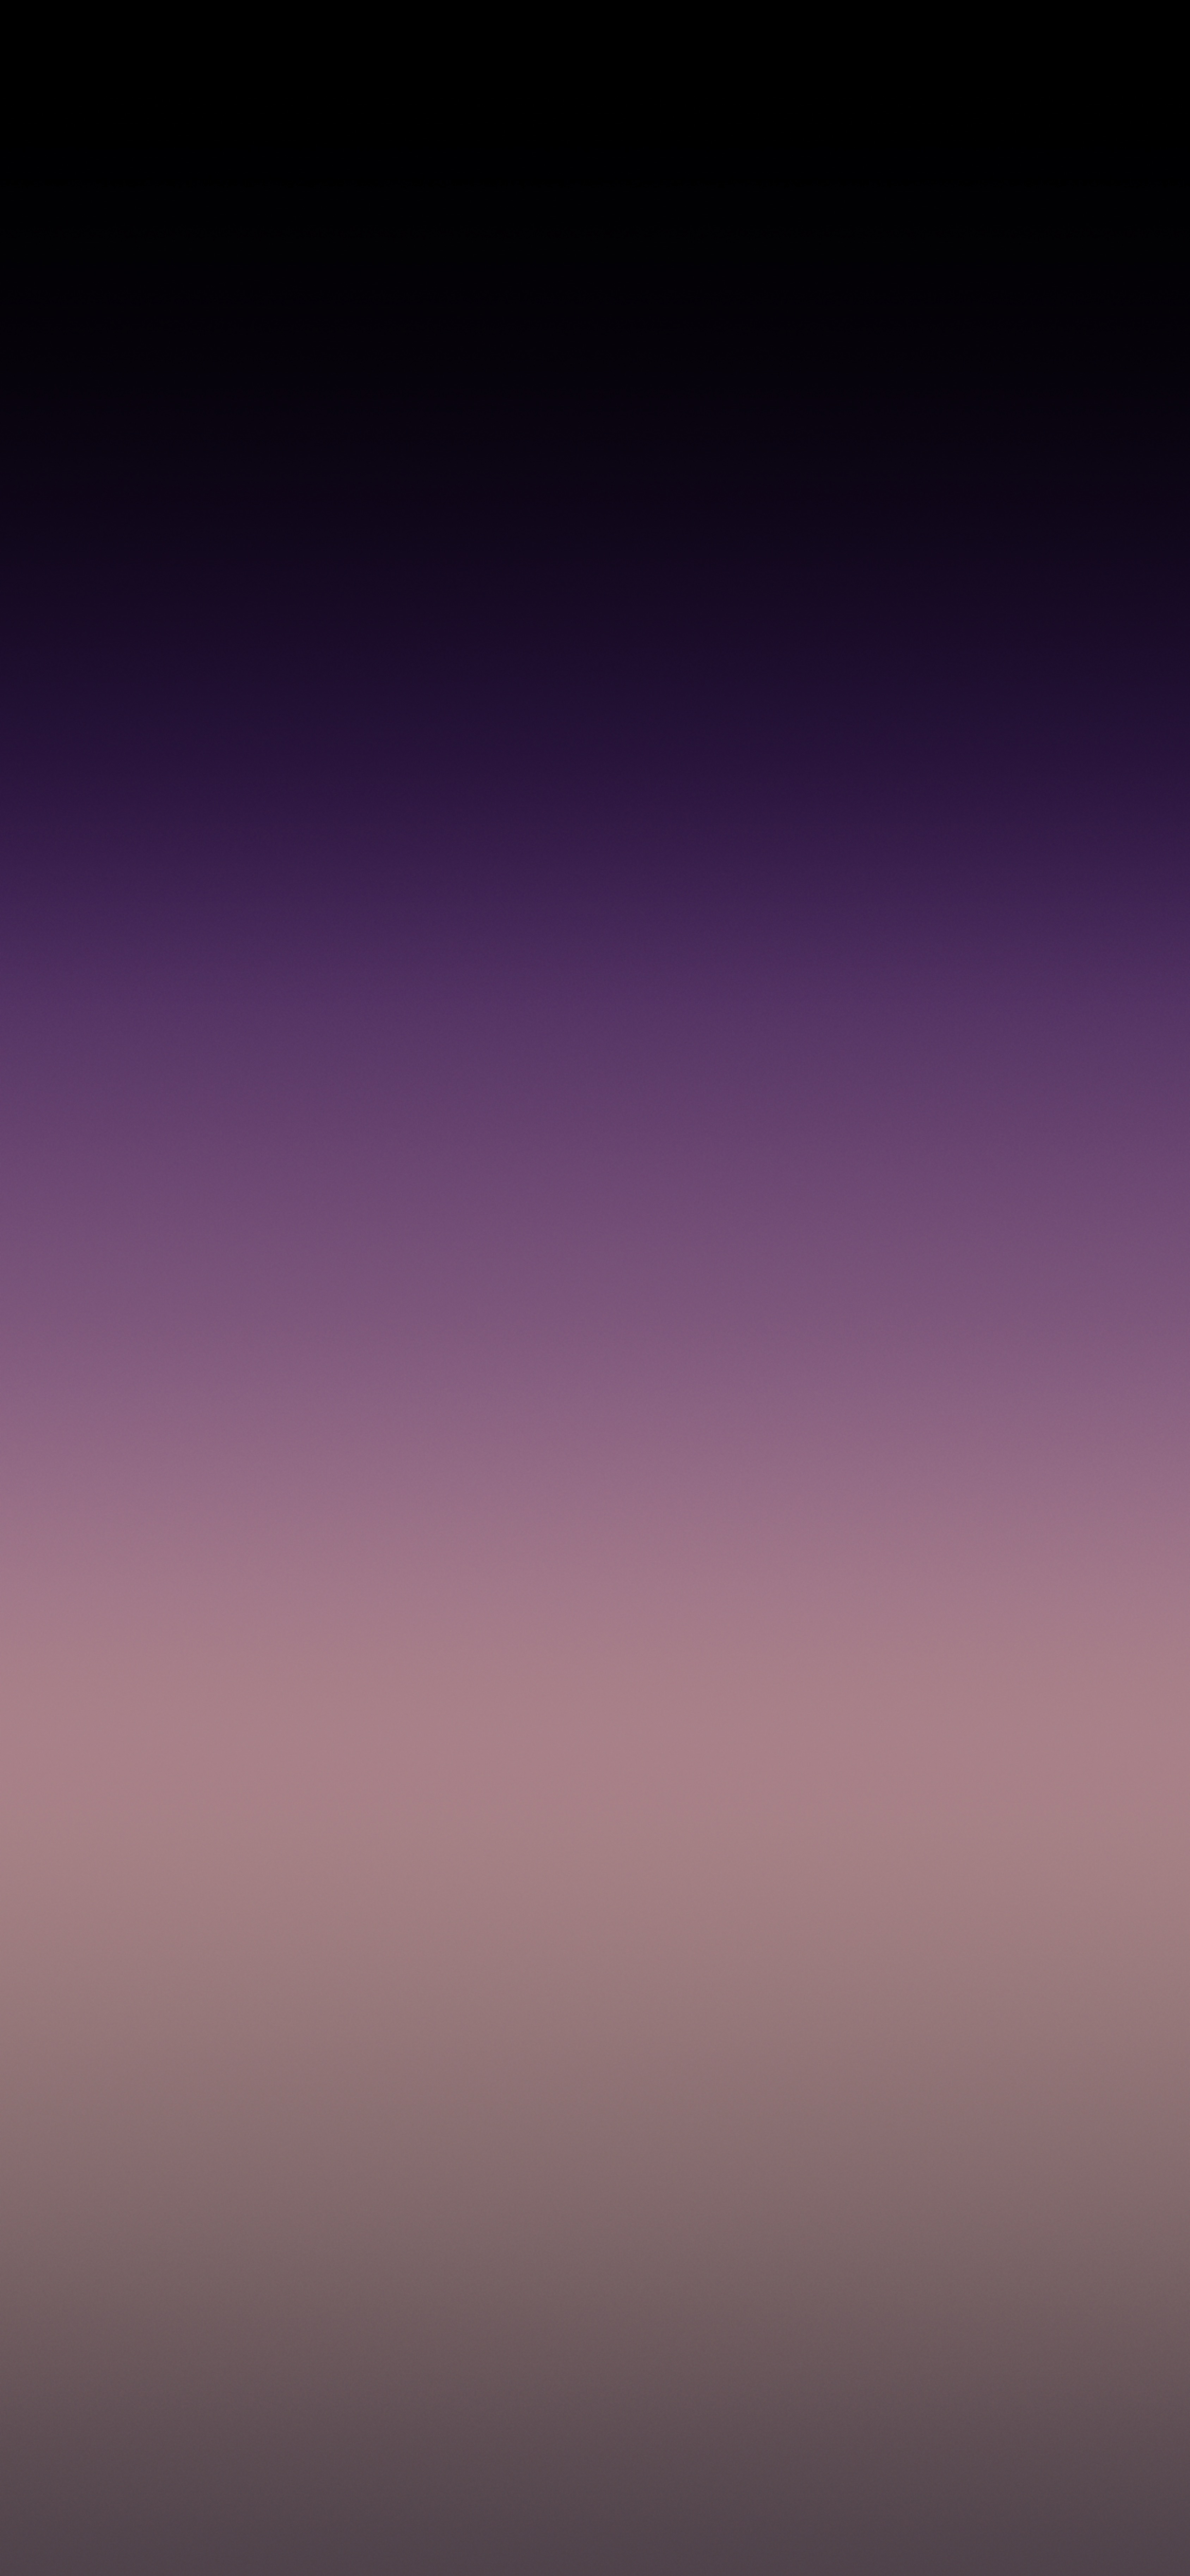 farbverlauf iphone wallpaper,lila,violett,blau,himmel,lila